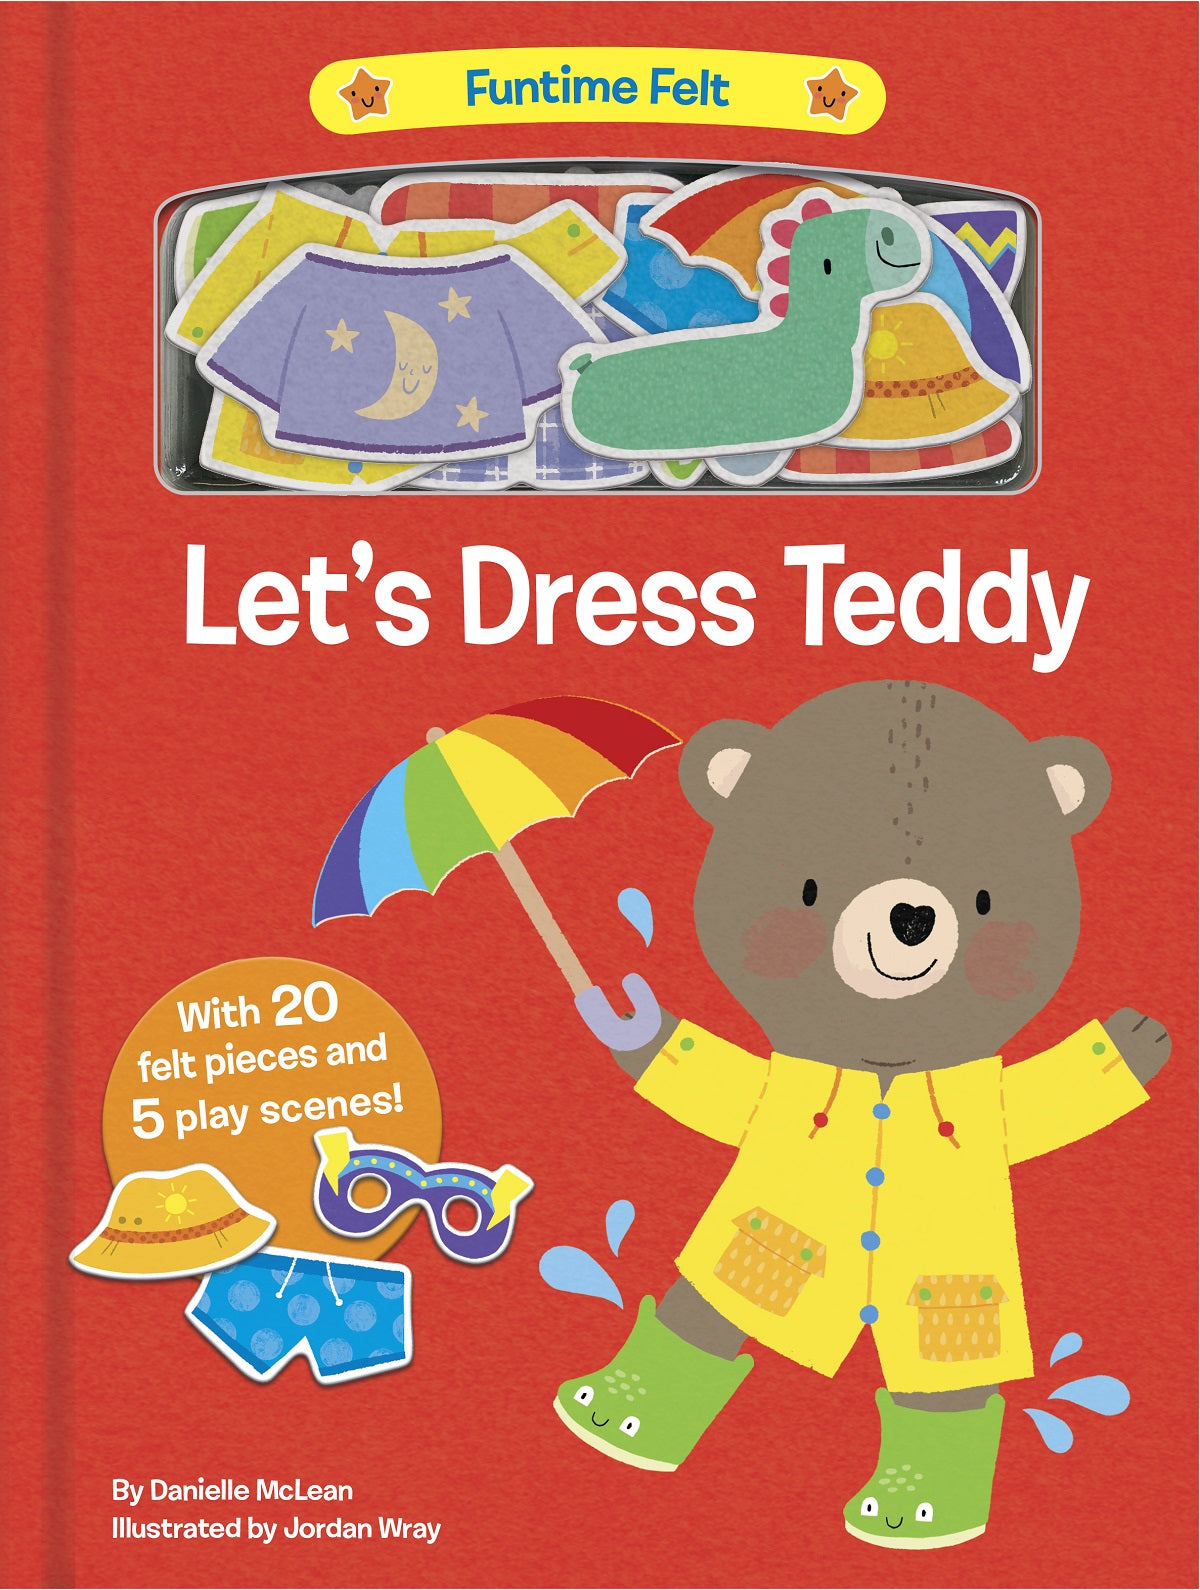 Let's Dress Teddy